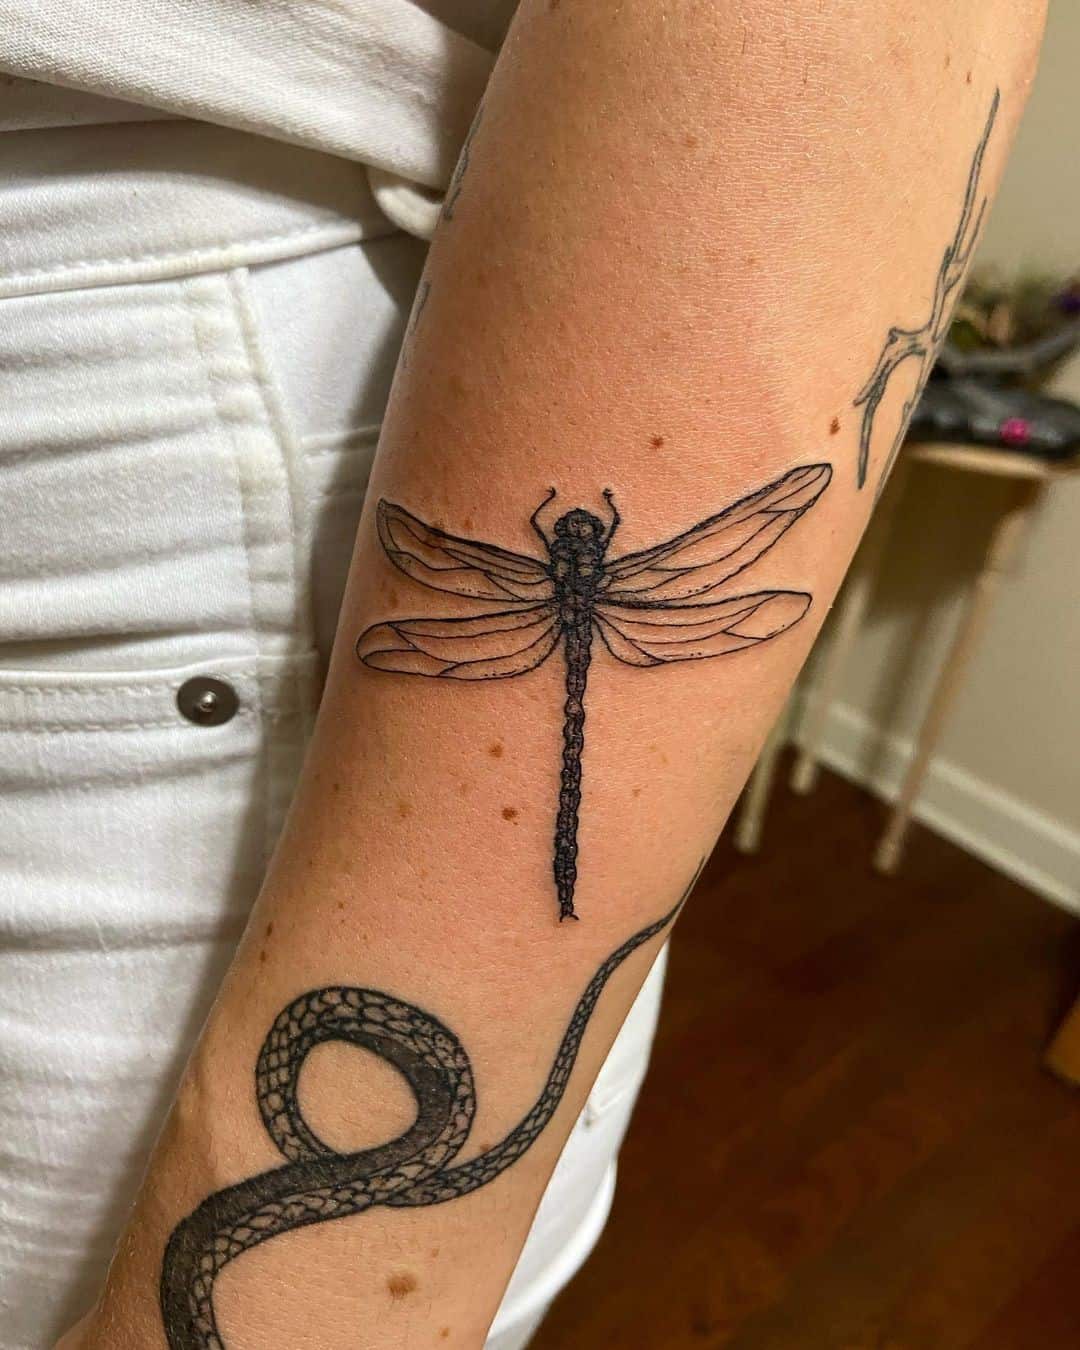 Tatuaje de libélula pequeña negra